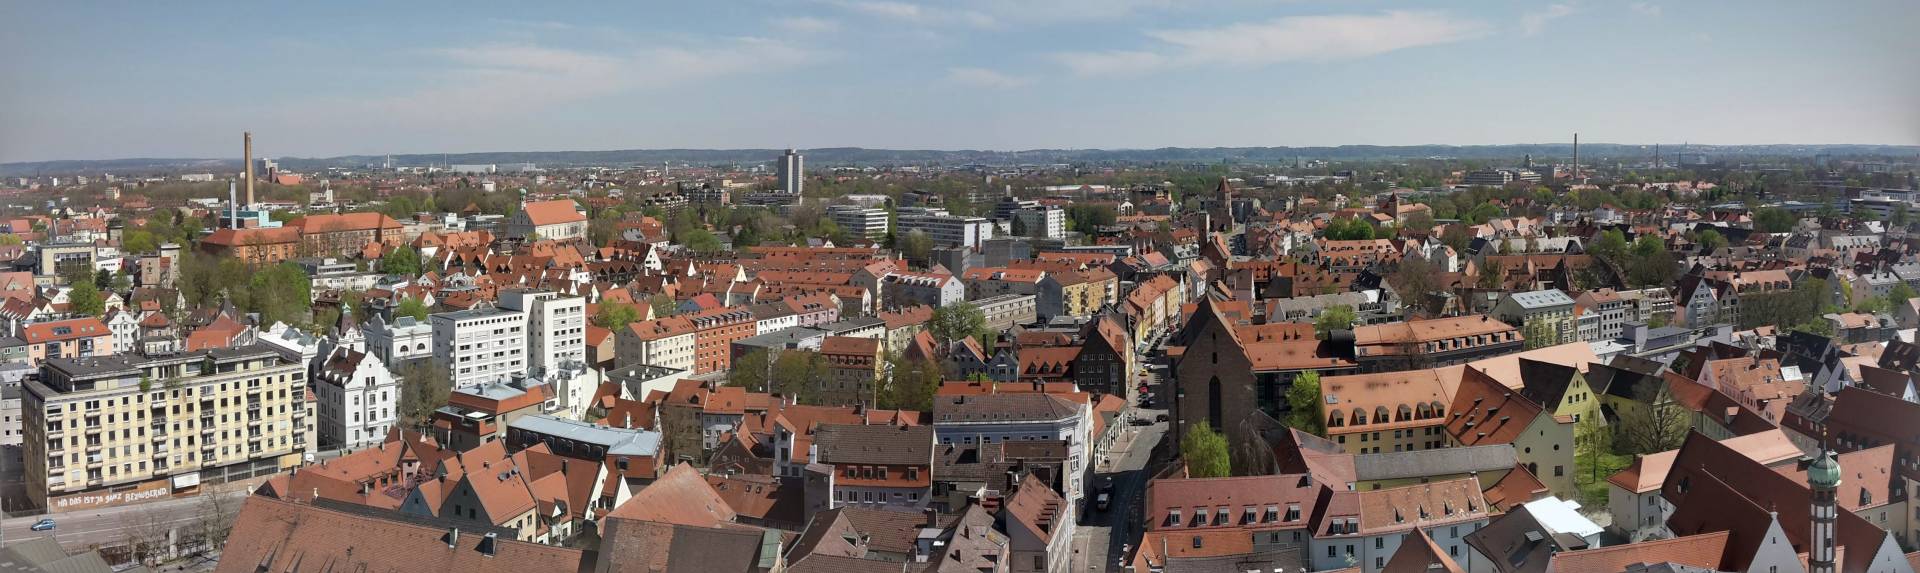 Blick vom Perlachturm in Augsburg